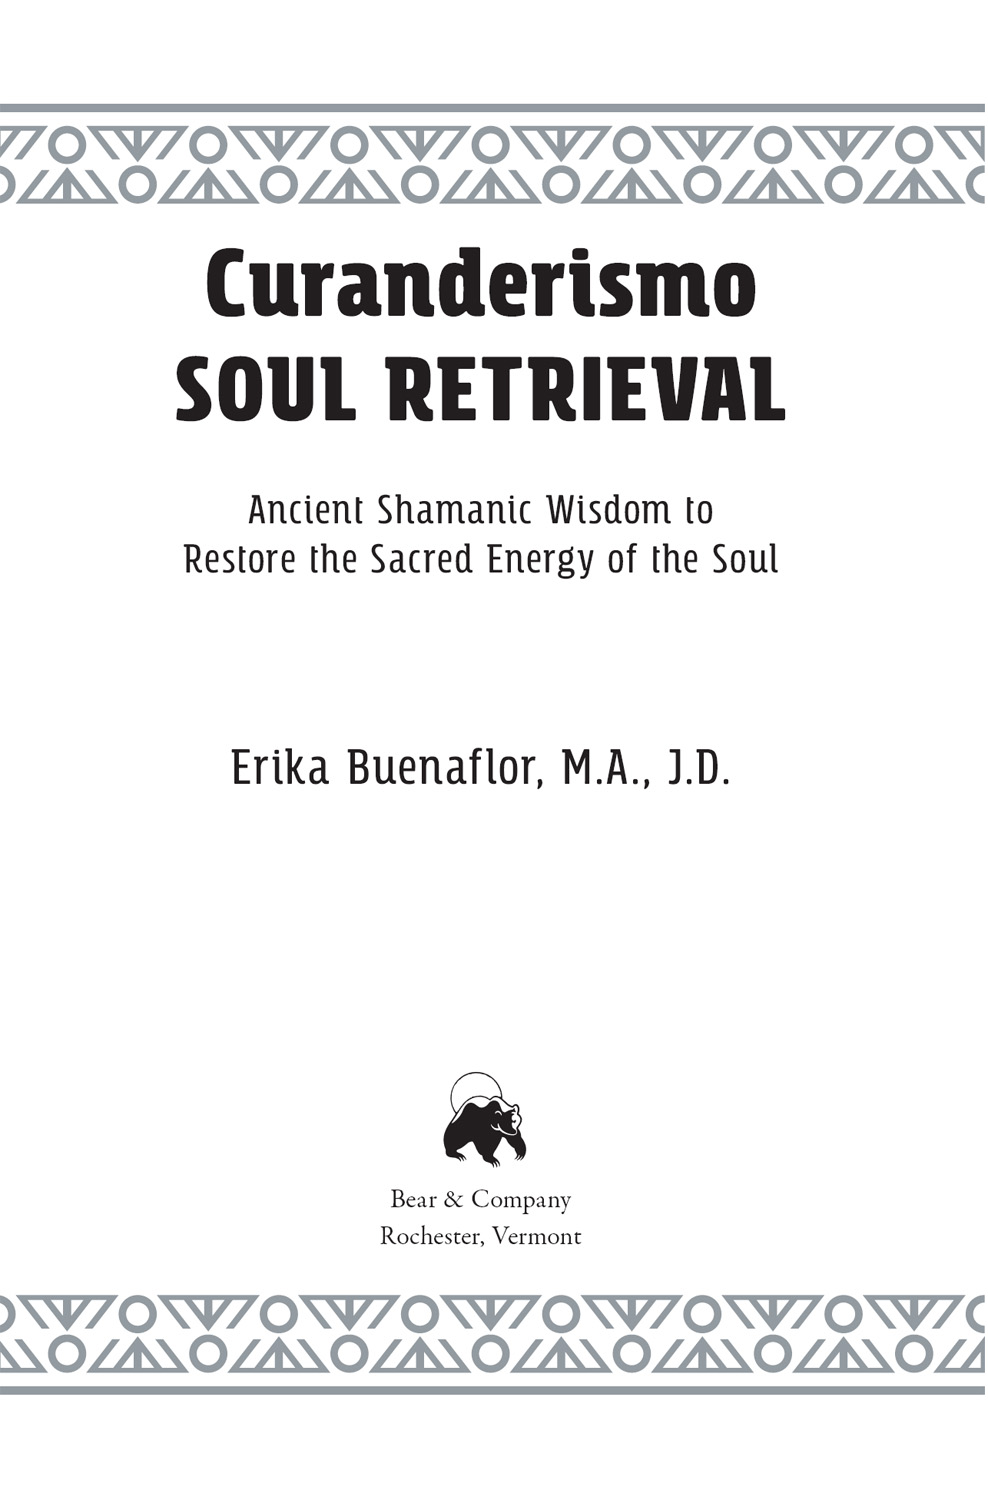 Curanderismo Soul Retrieval Ancient Shamanic Wisdom to Restore the Sacred Energy of the Soul - image 2